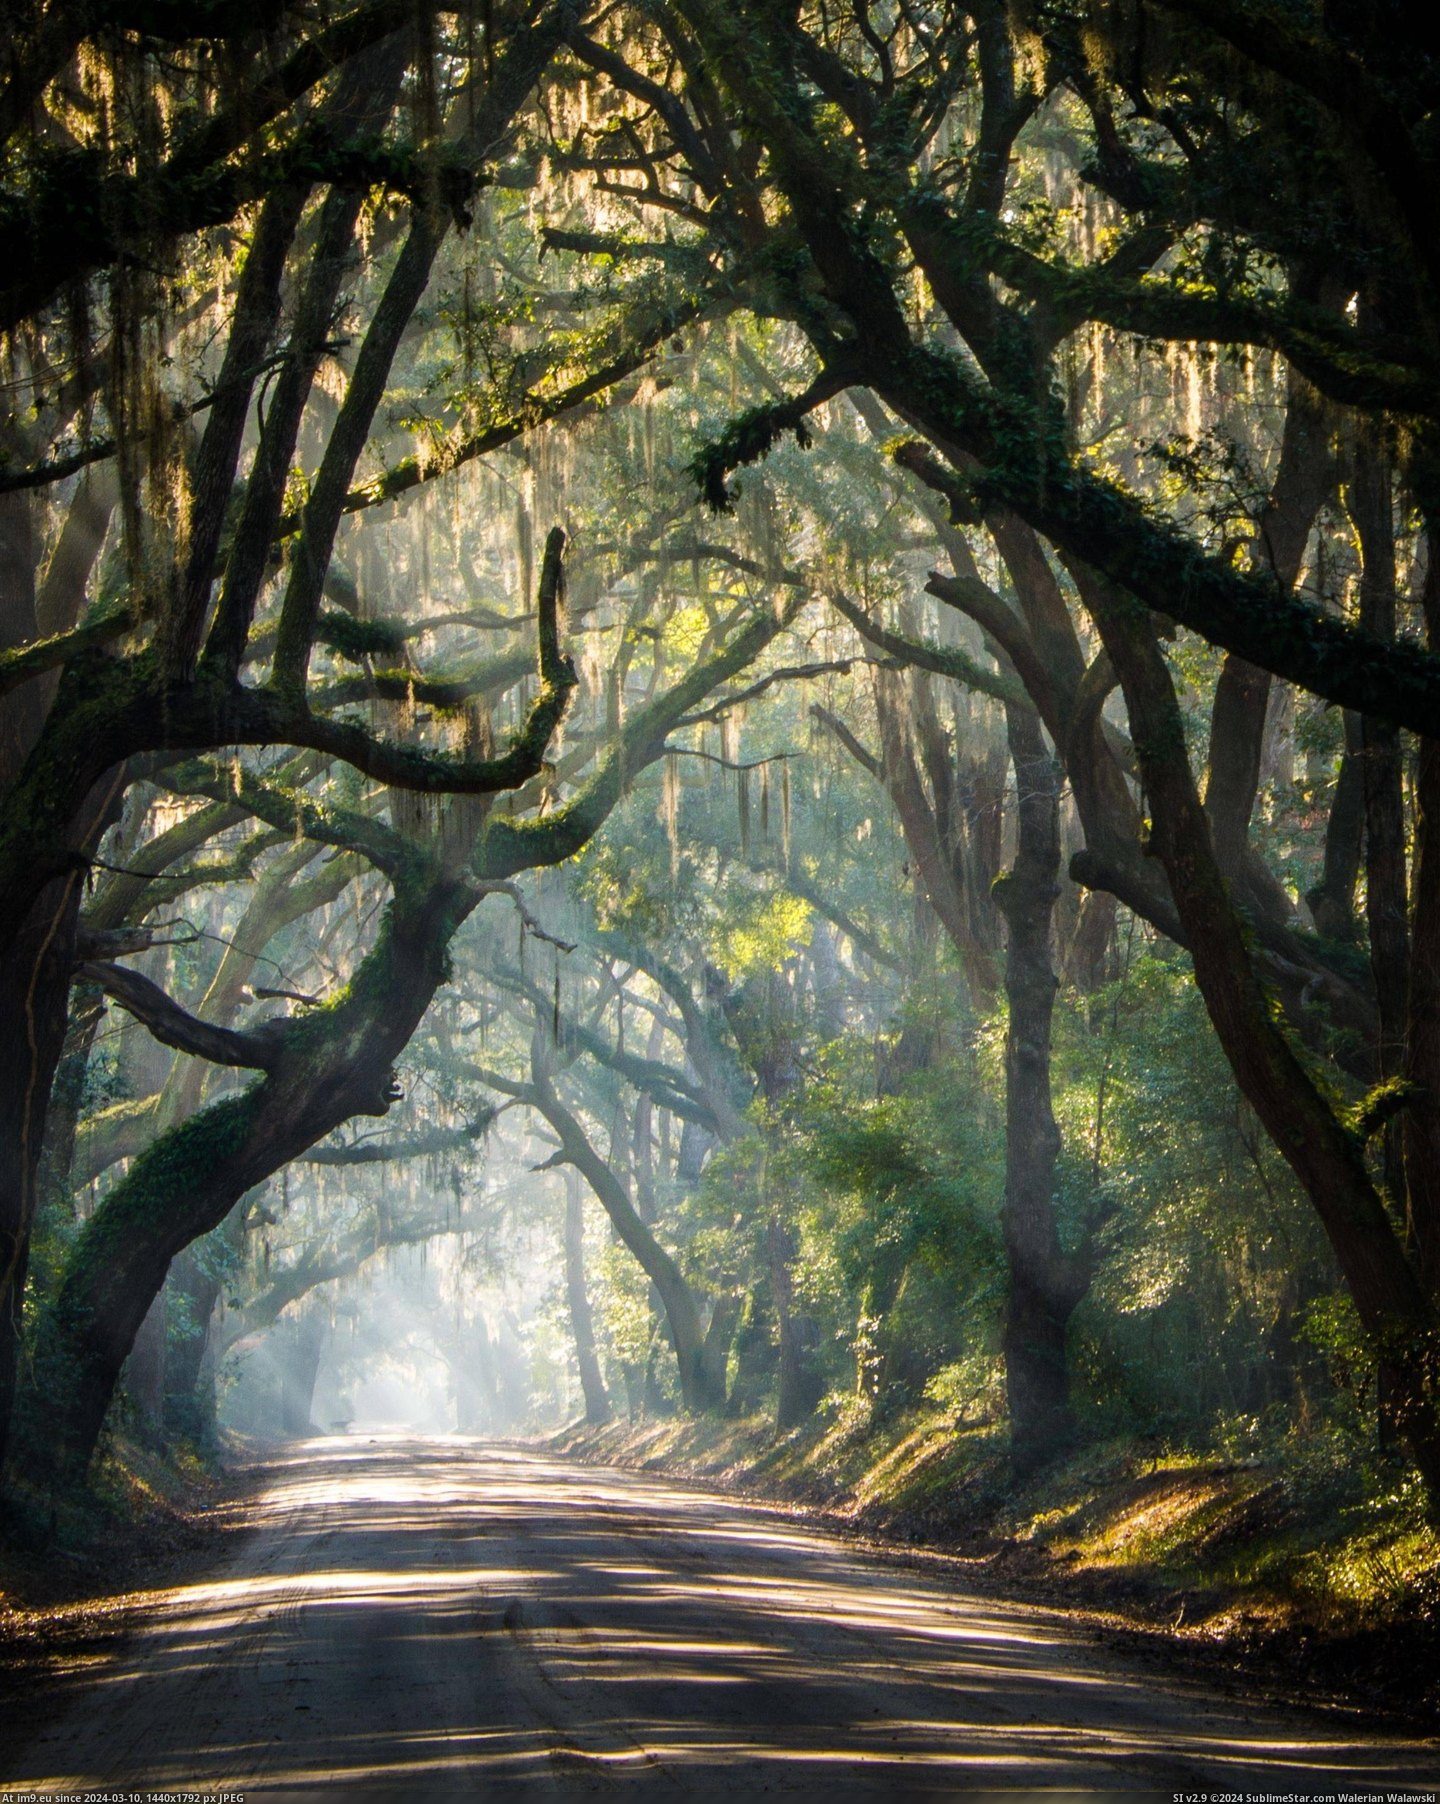 #South #Rural #Roads #Carolina [Pics] The rural roads of South Carolina Pic. (Obraz z album My r/PICS favs))